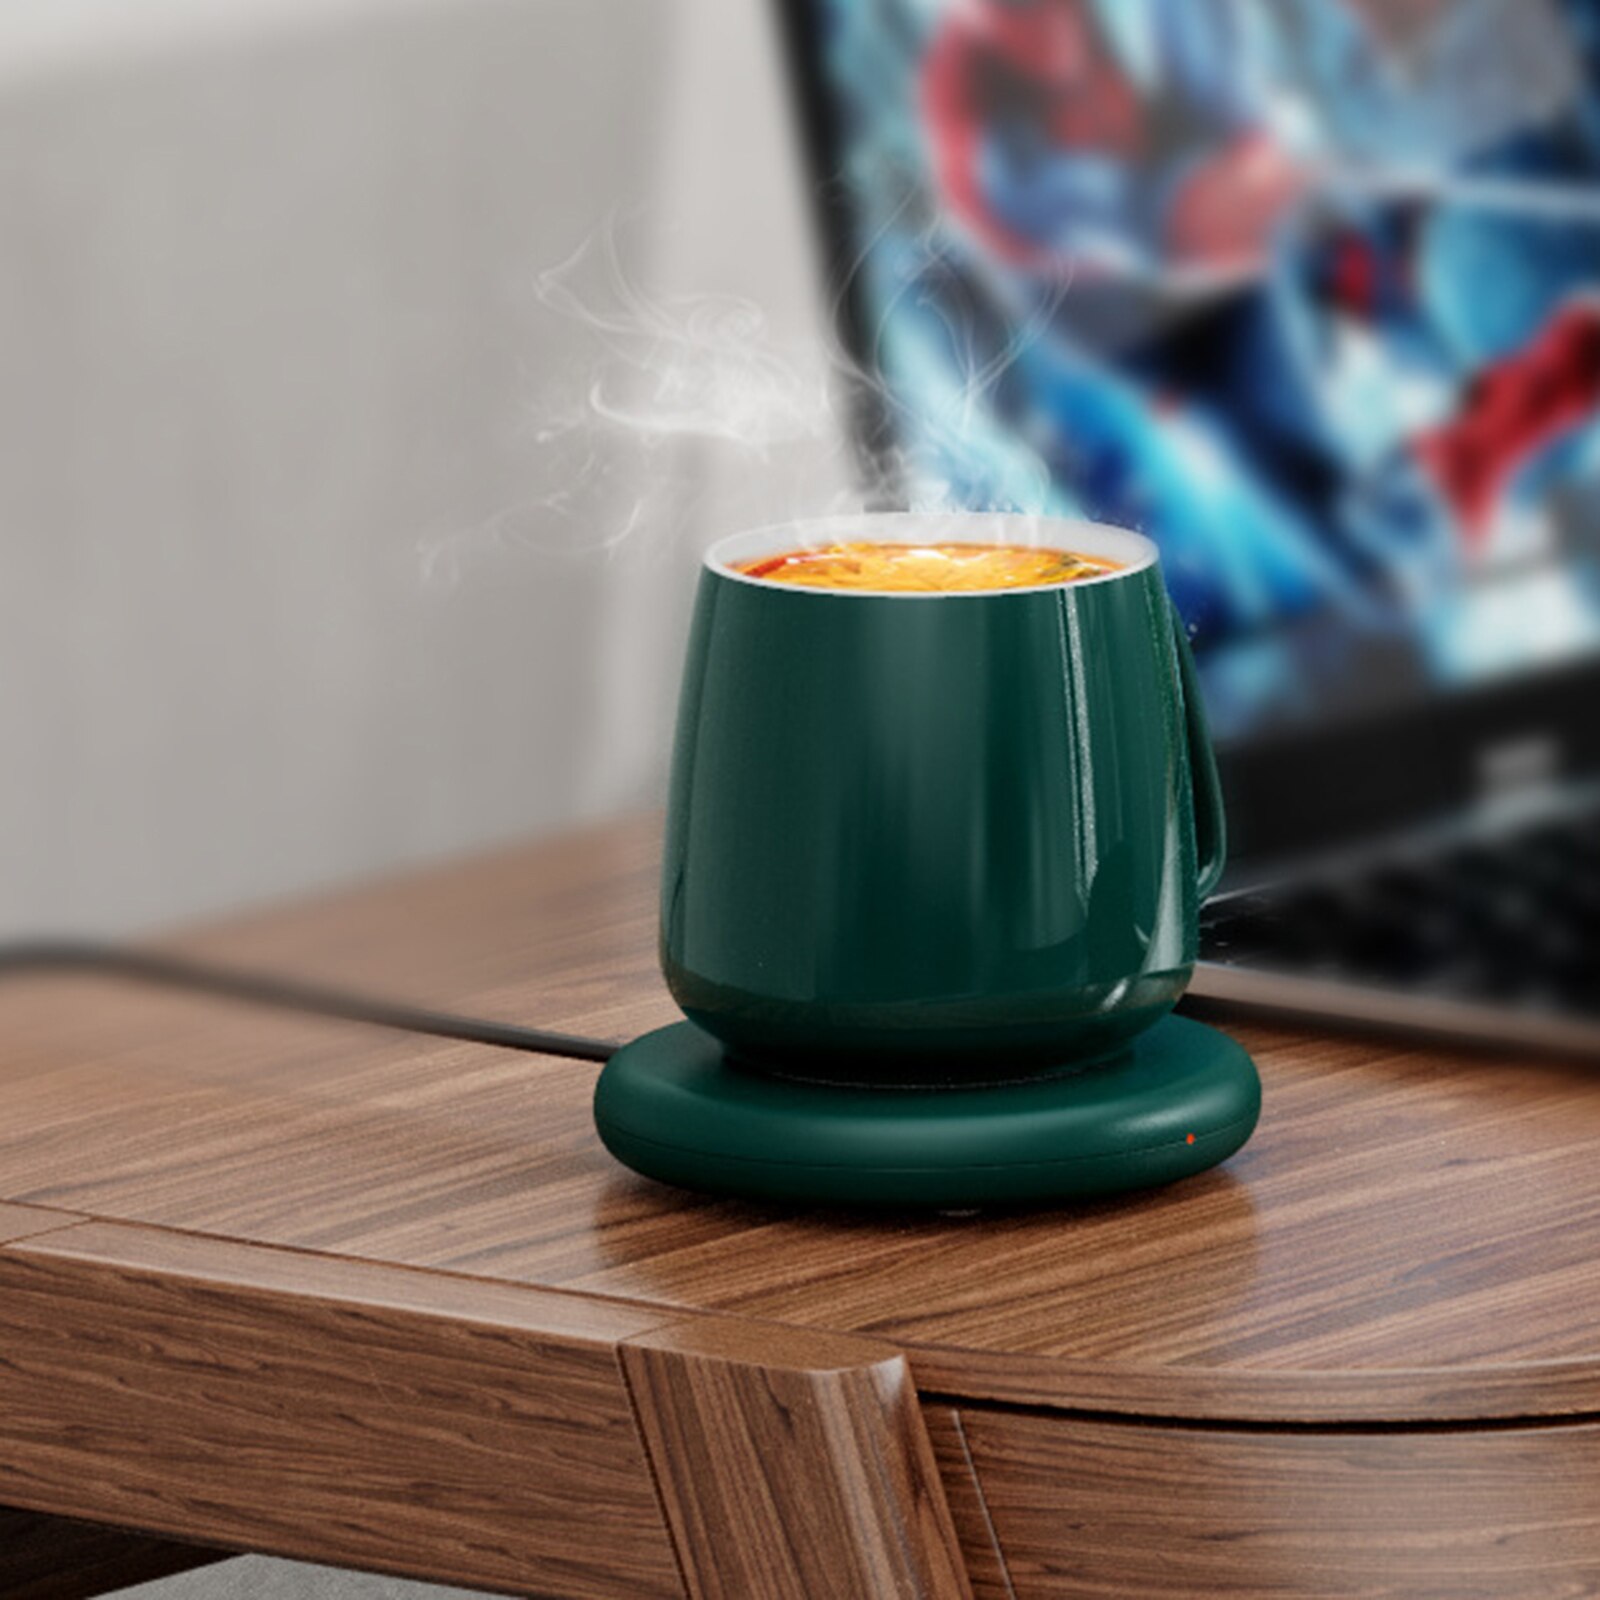 Bærbar usb elektrisk kop varmere te kaffe drik kop varmepude måtter varm celsius grad usb varmere til krus kop kaffe